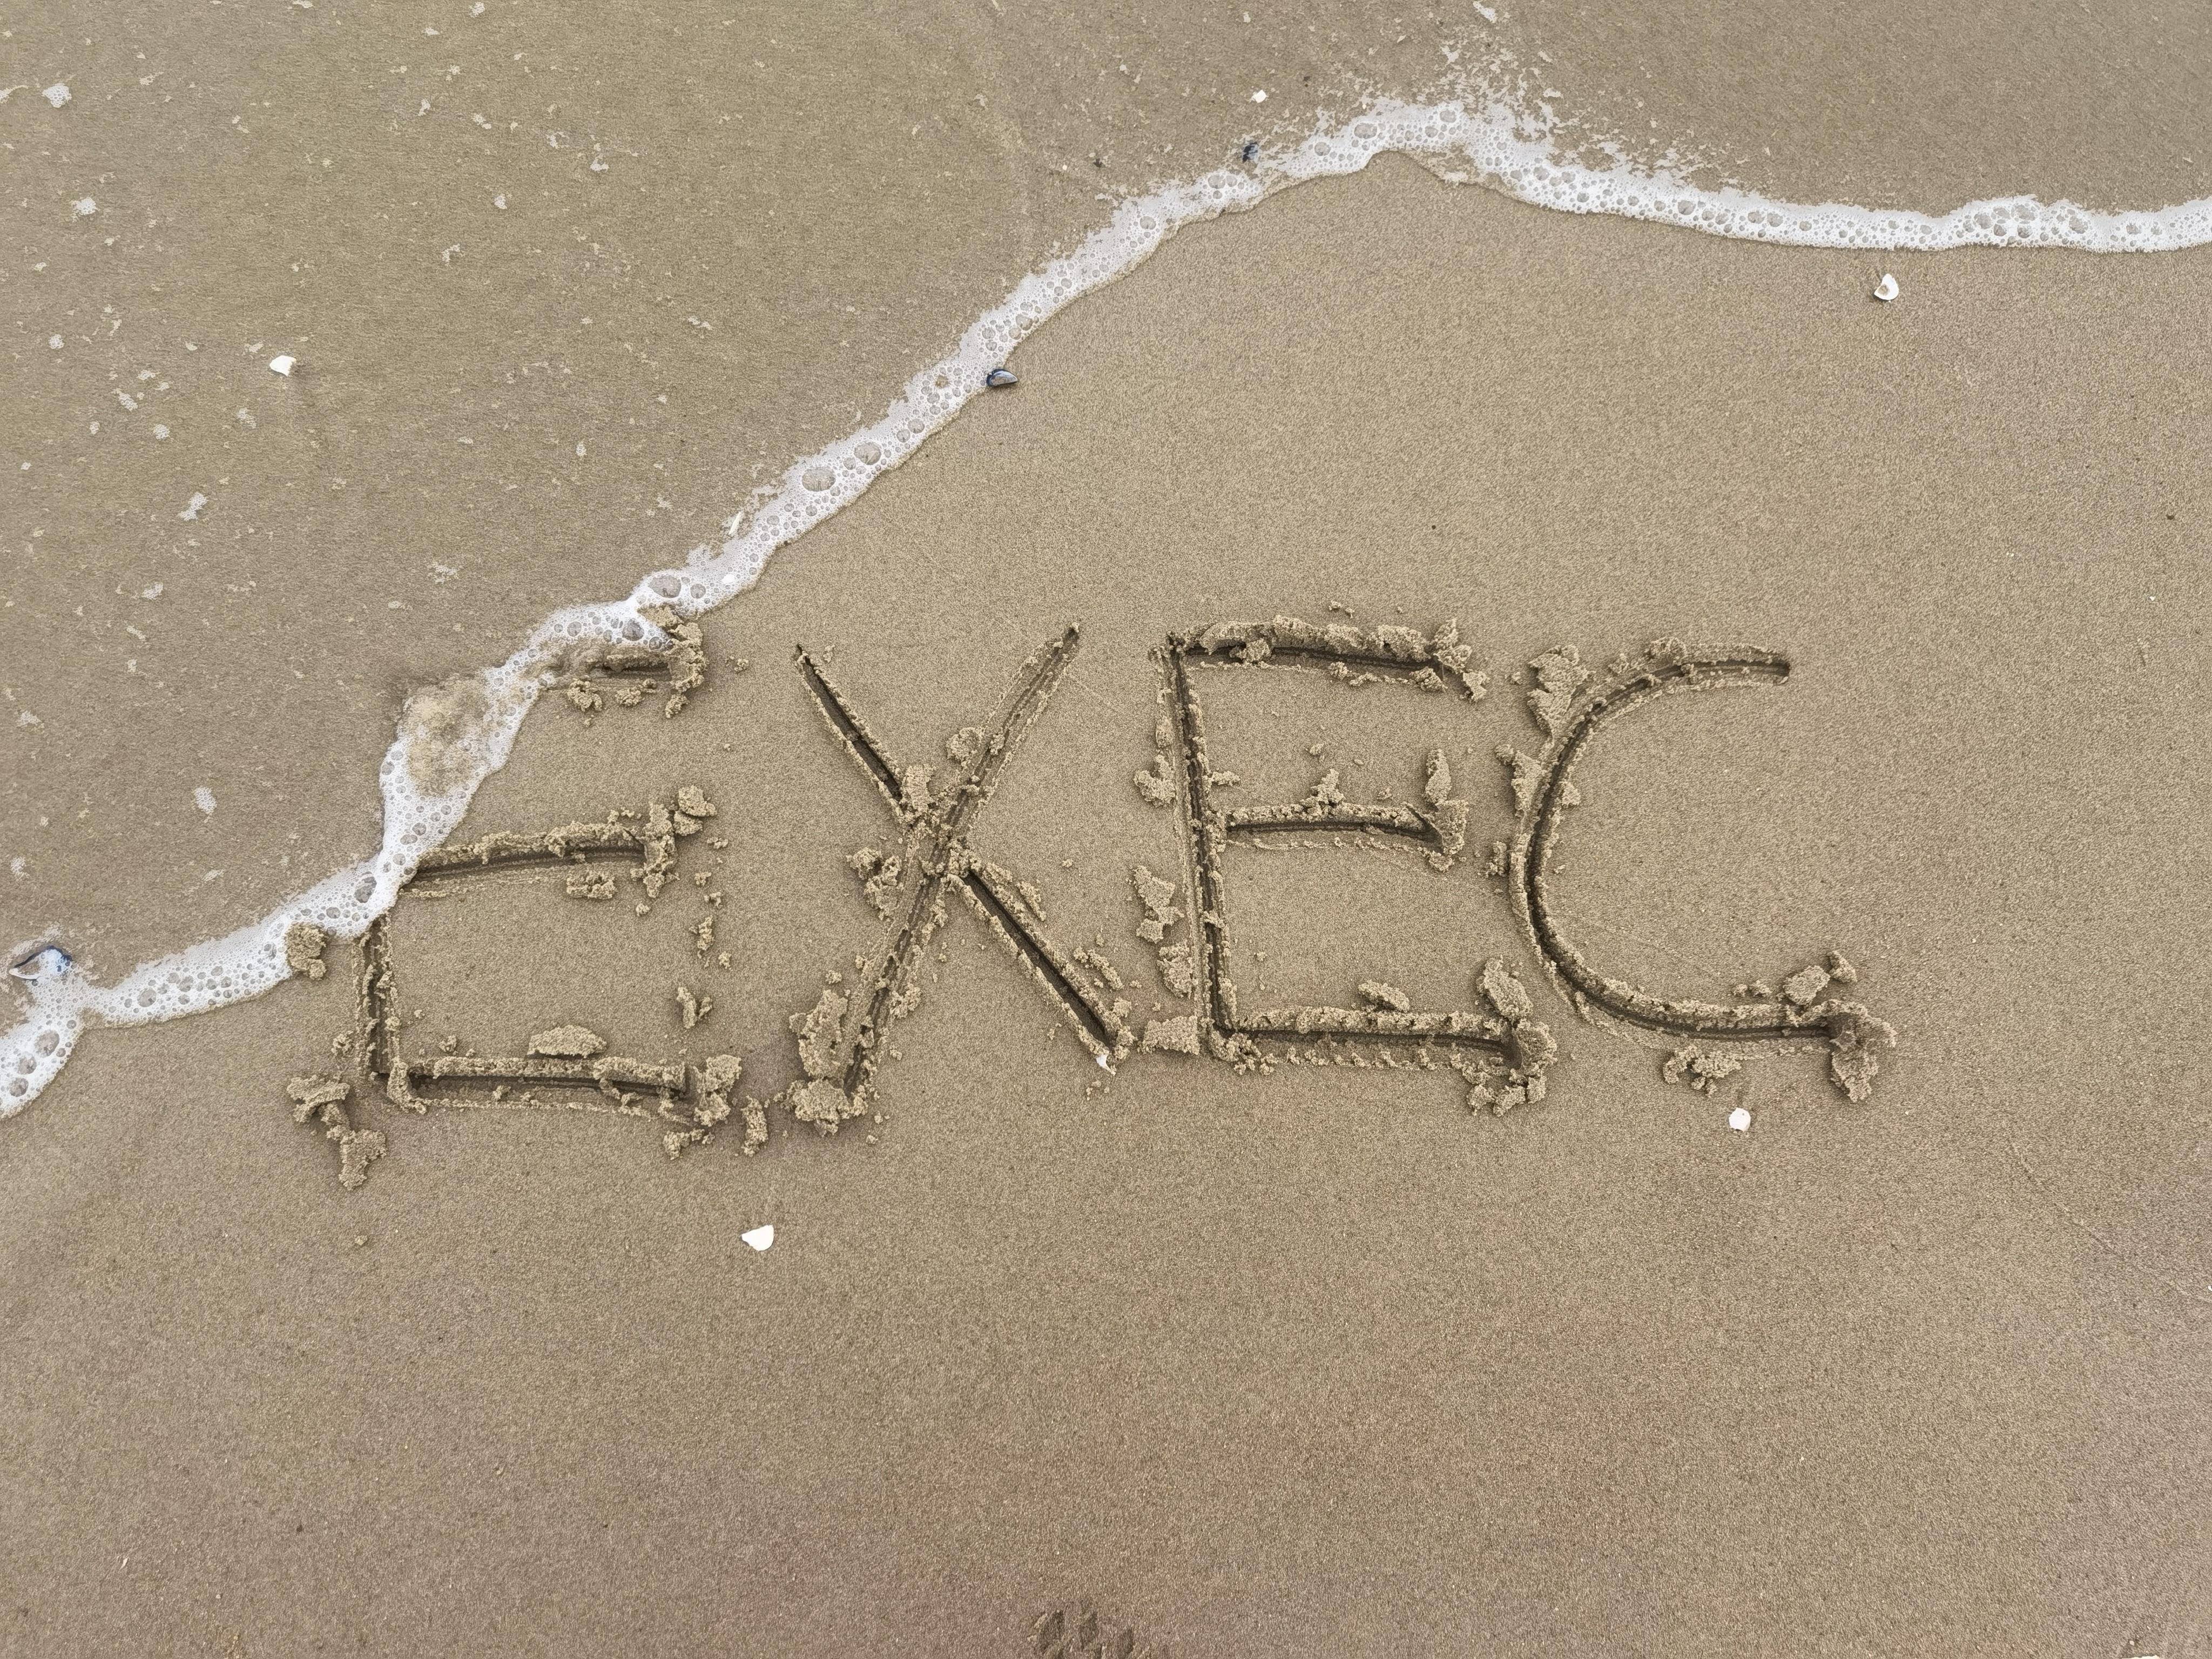 exec on beach